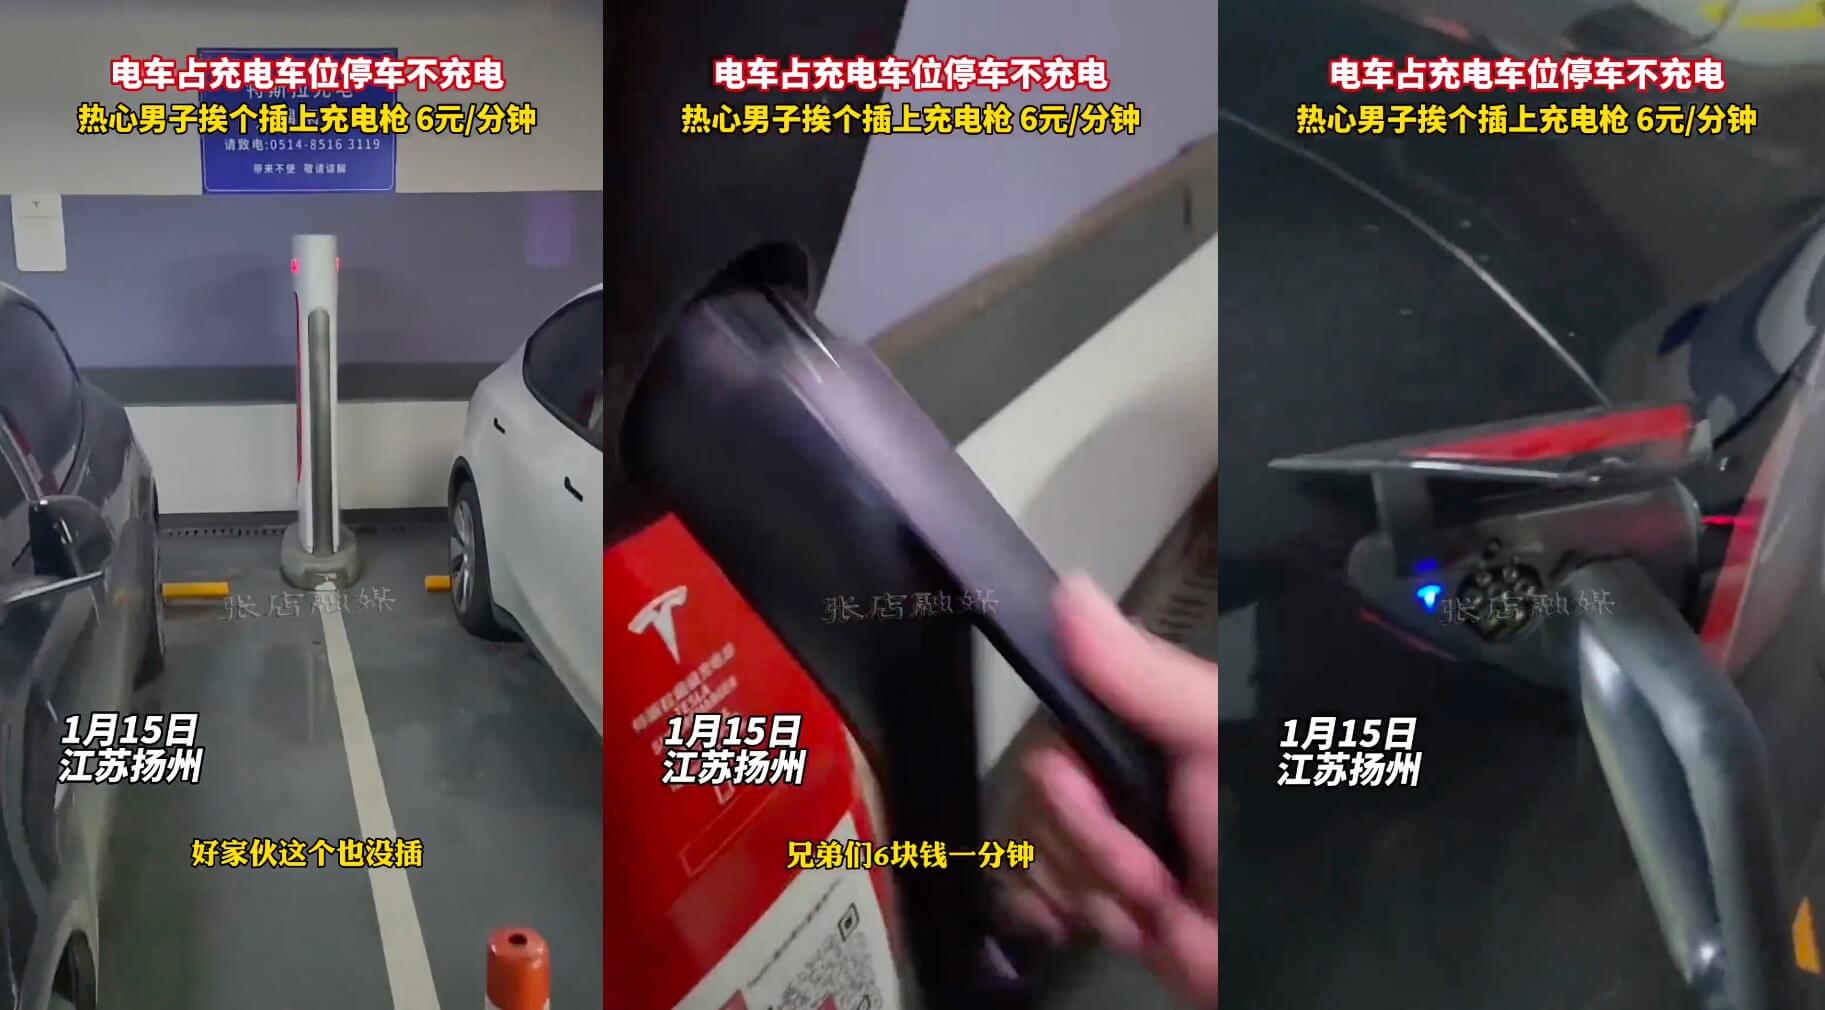 Tesla Supercharger burgerwacht neemt wraak op “EVholes” in China